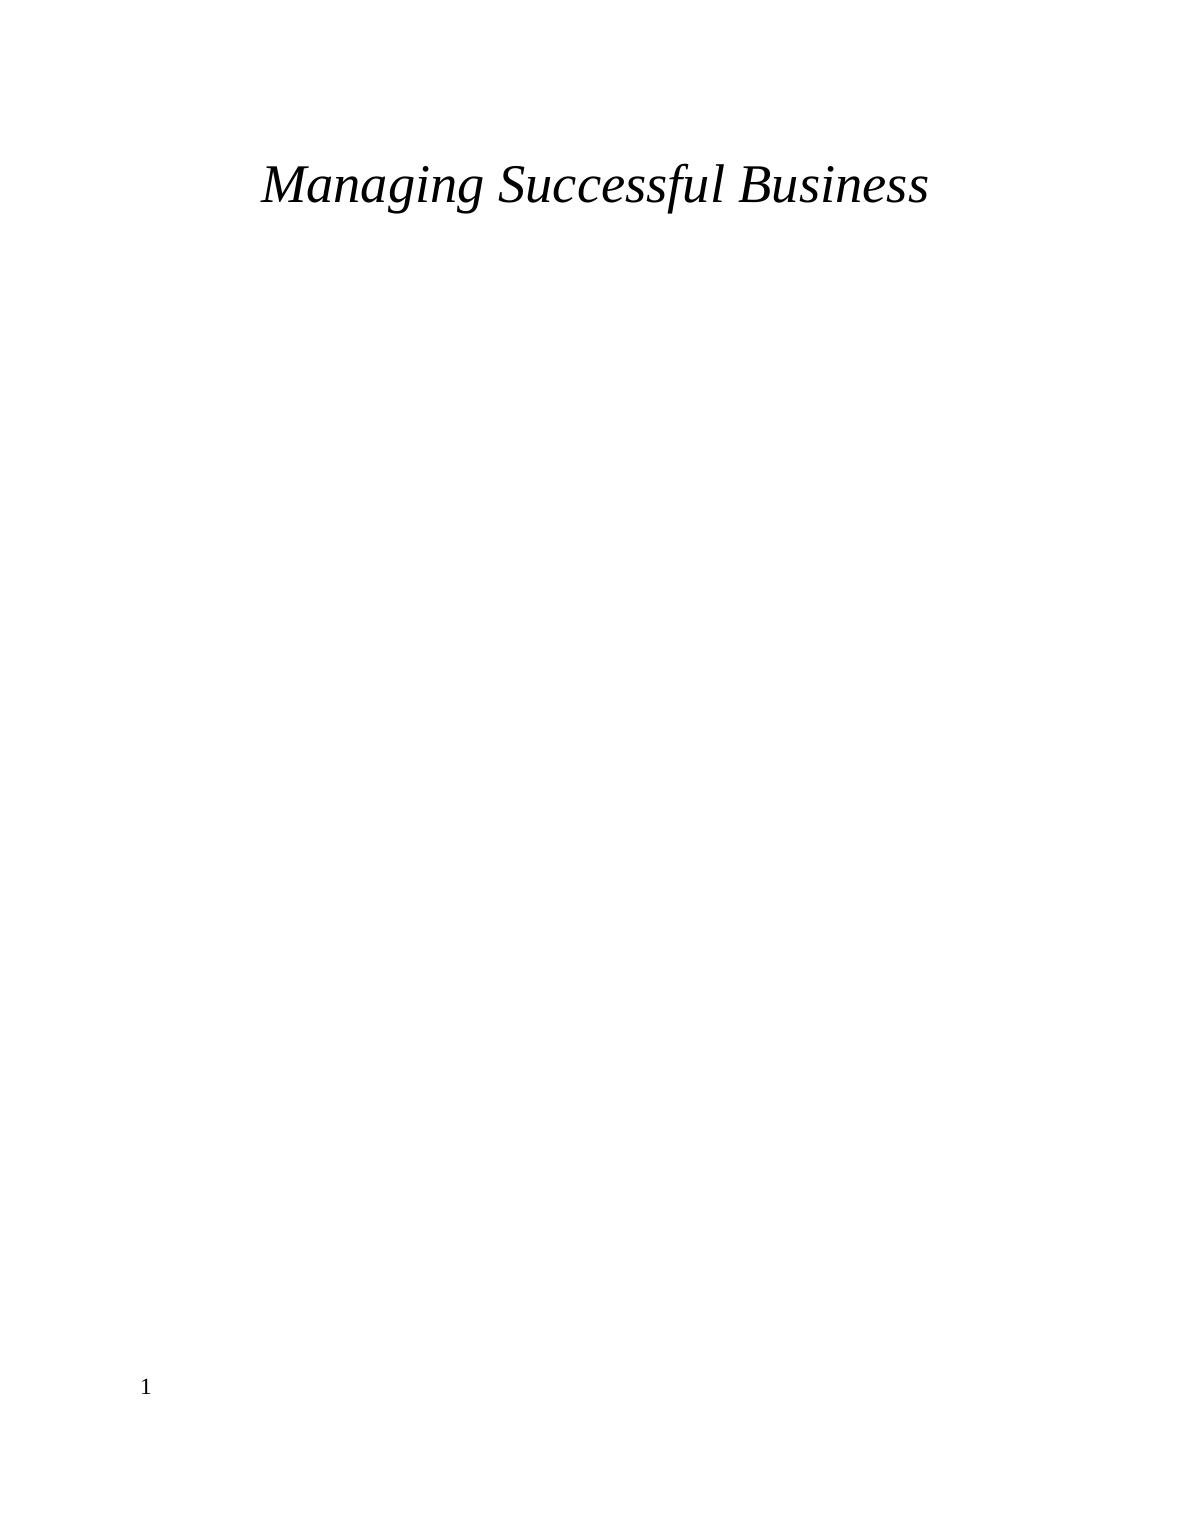 Managing Successful Business | PSL_1